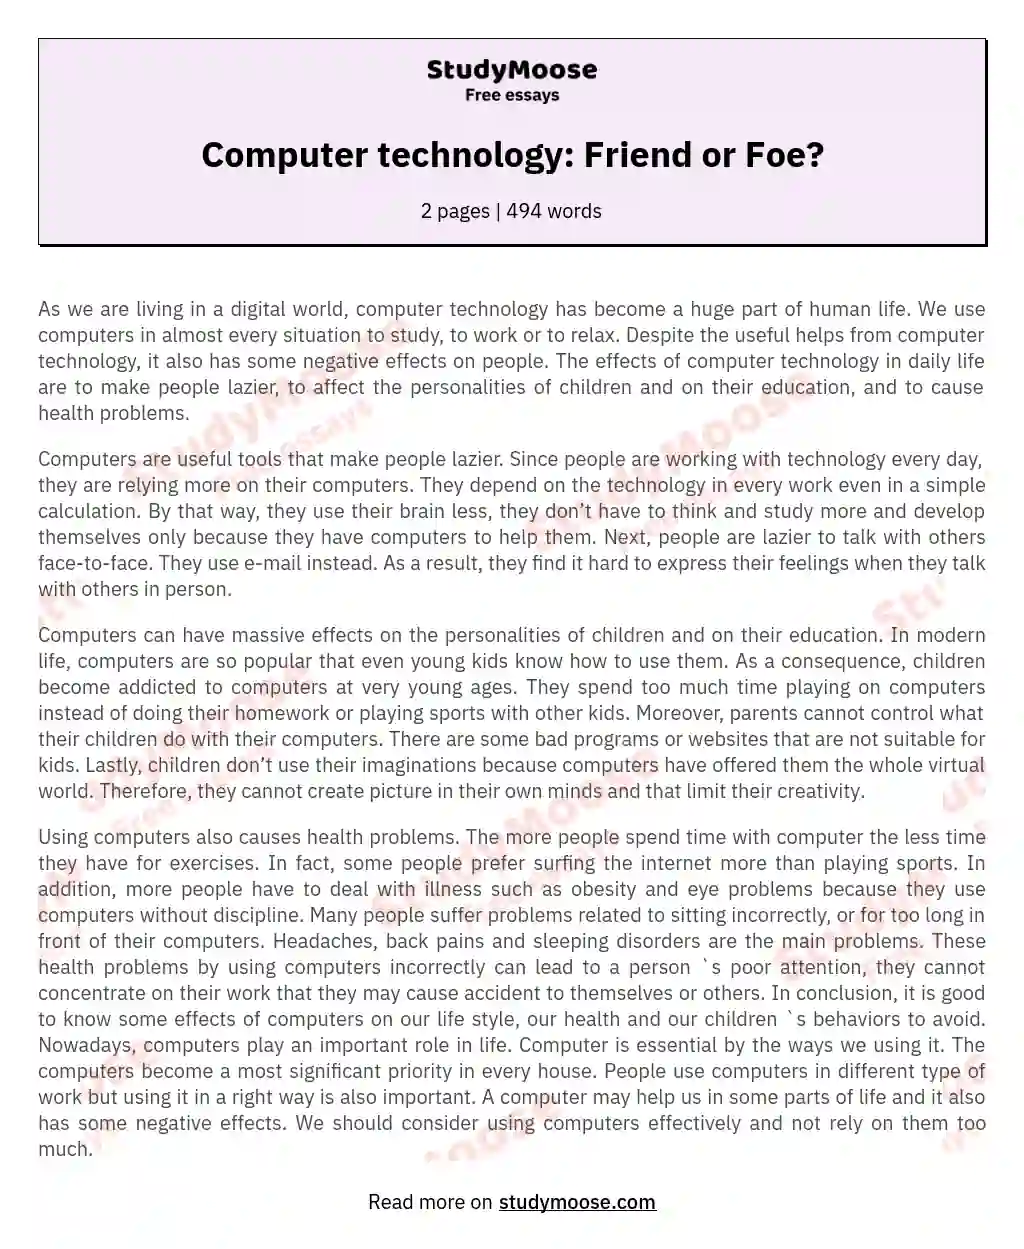 Computer technology: Friend or Foe? essay